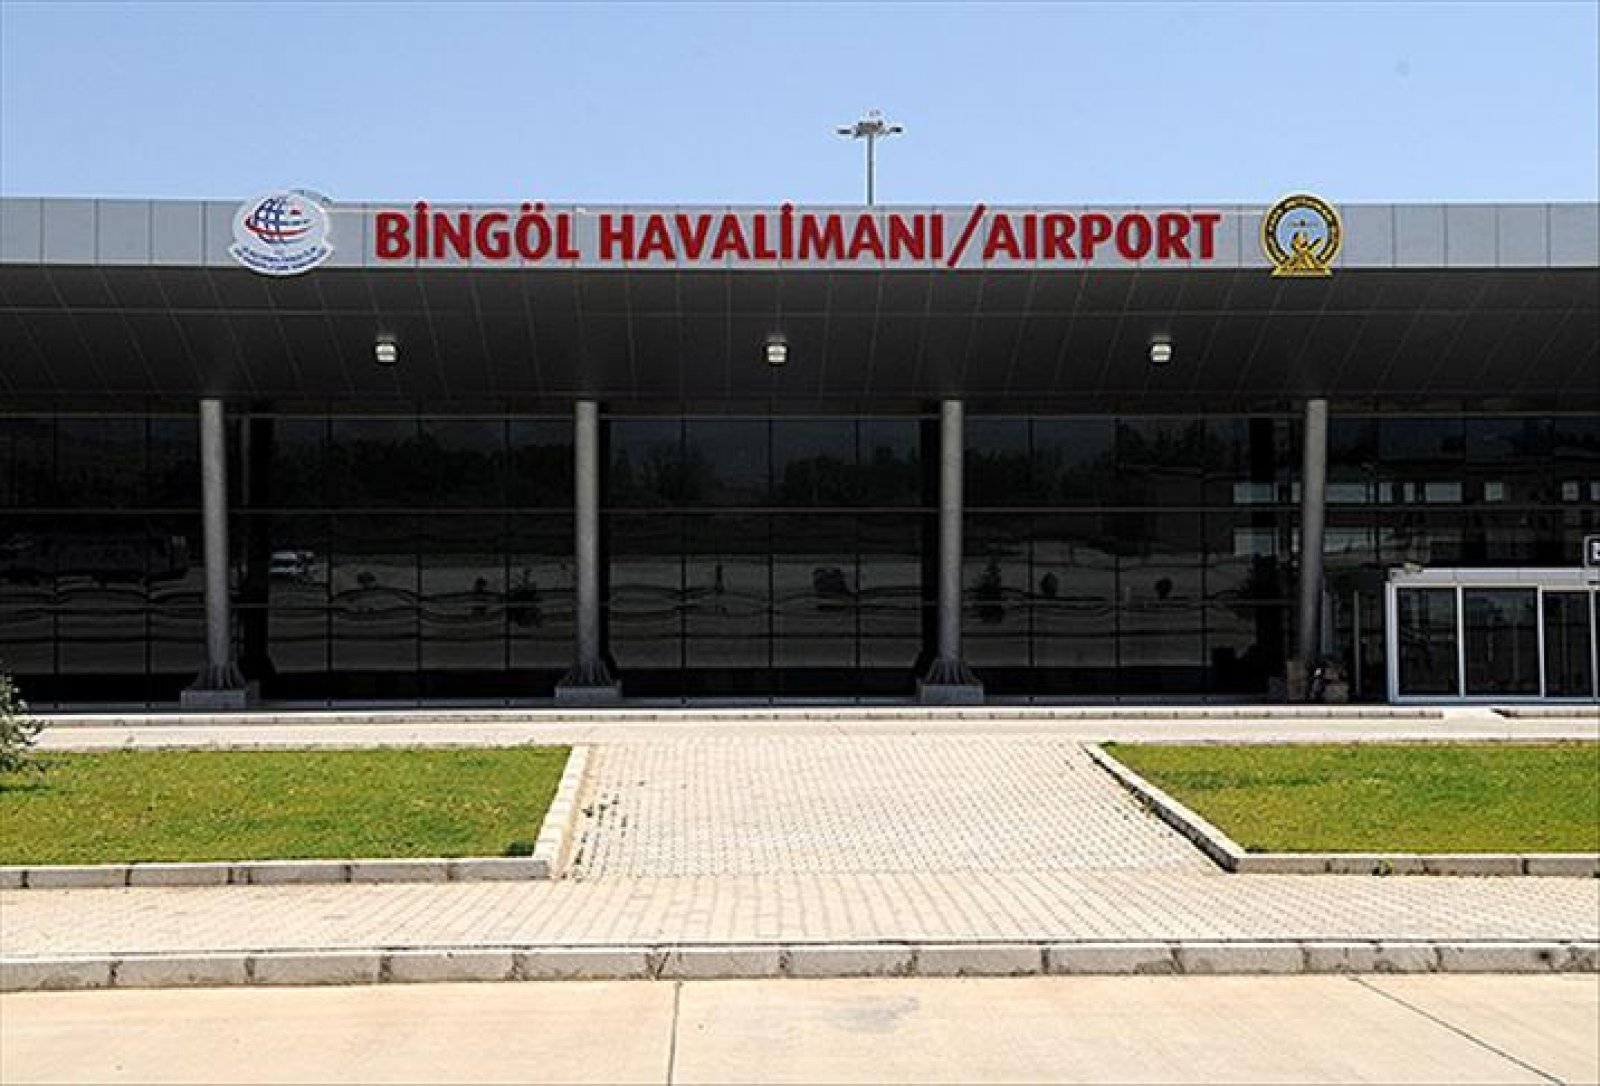 Bingöl Airport